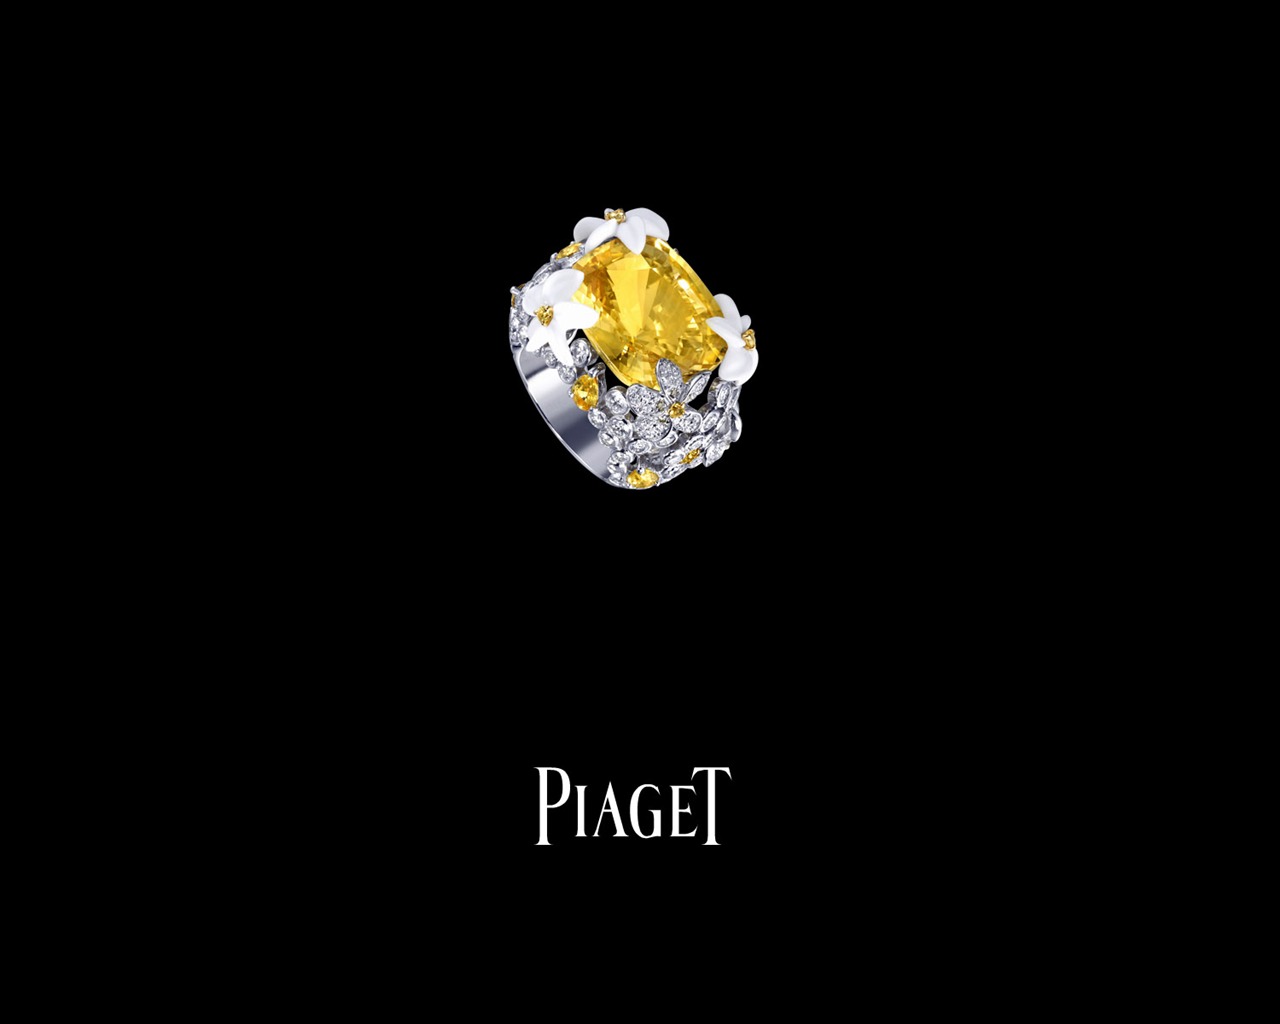 Piaget diamond jewelry wallpaper (4) #1 - 1280x1024